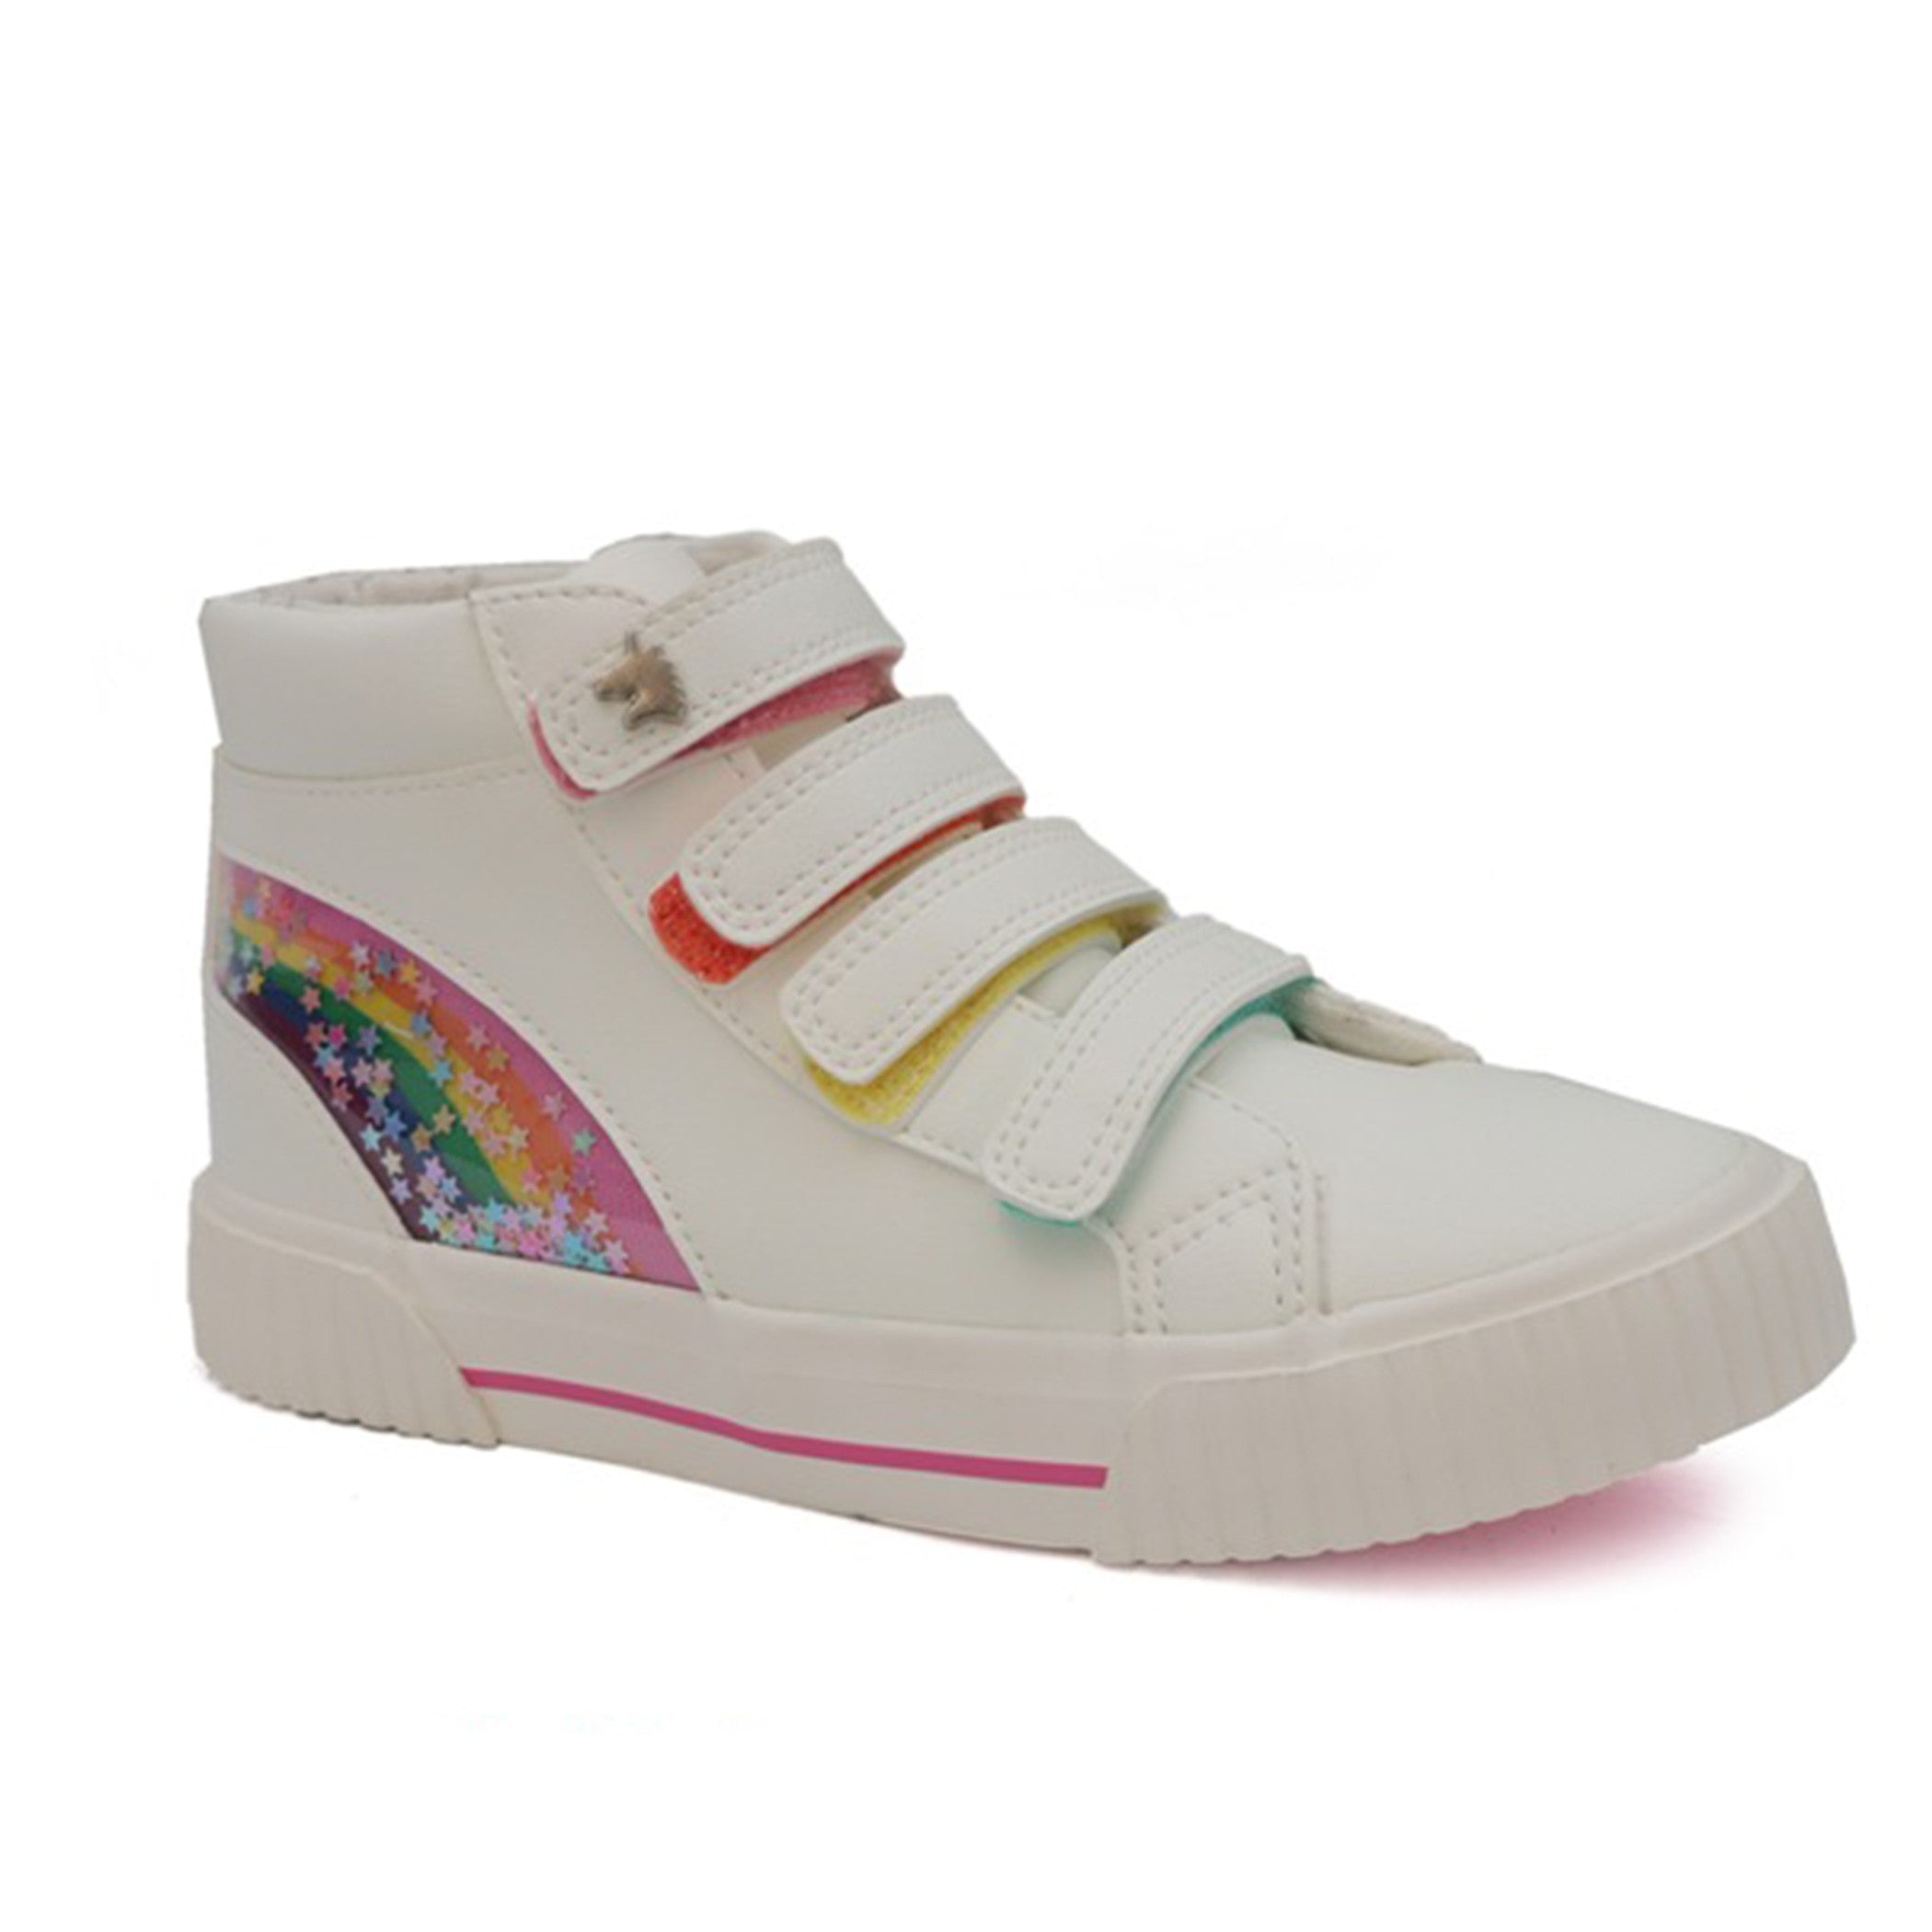 Rainbow Velcro Hightop Sneakers